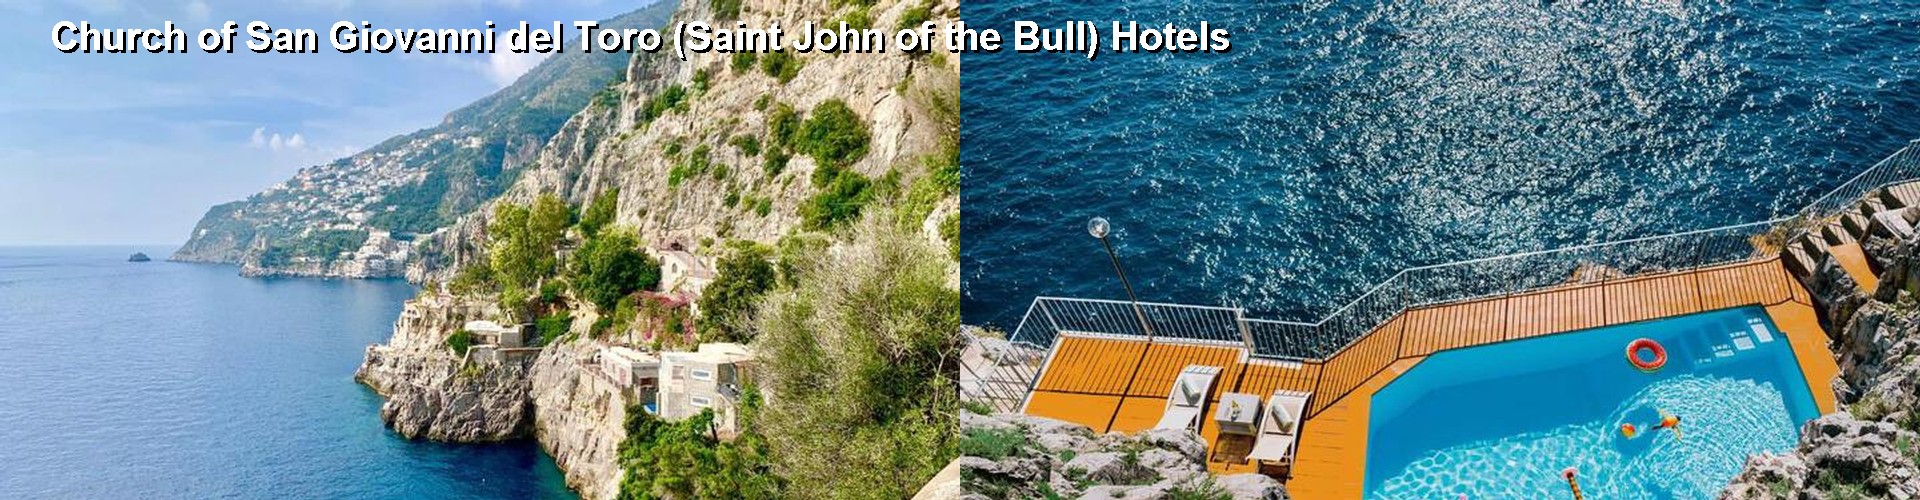 5 Best Hotels near Church of San Giovanni del Toro (Saint John of the Bull)